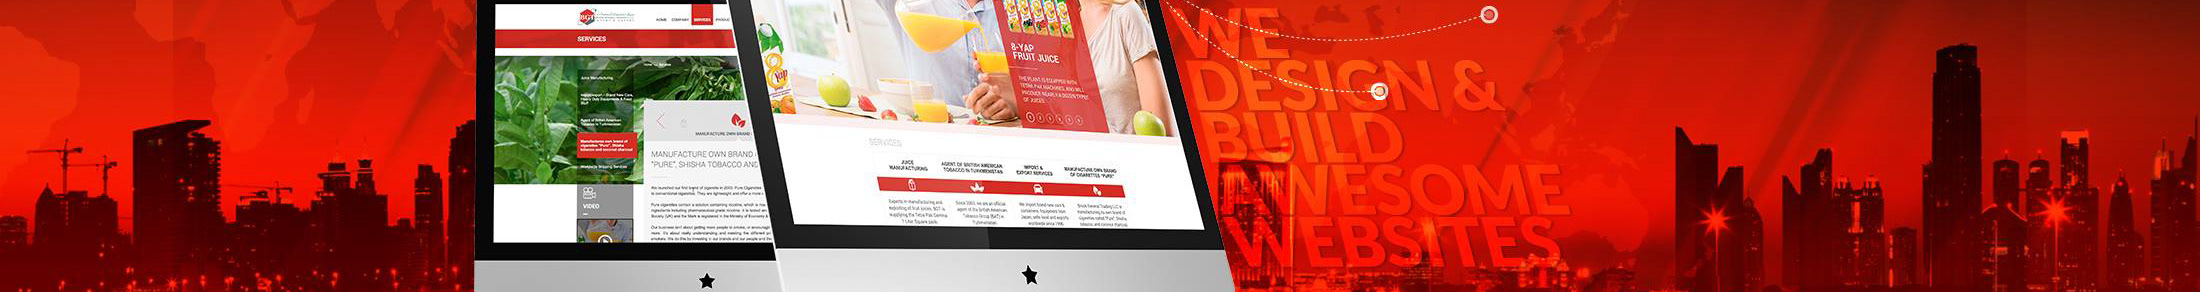 RedSpider Web & Art Design's profile banner